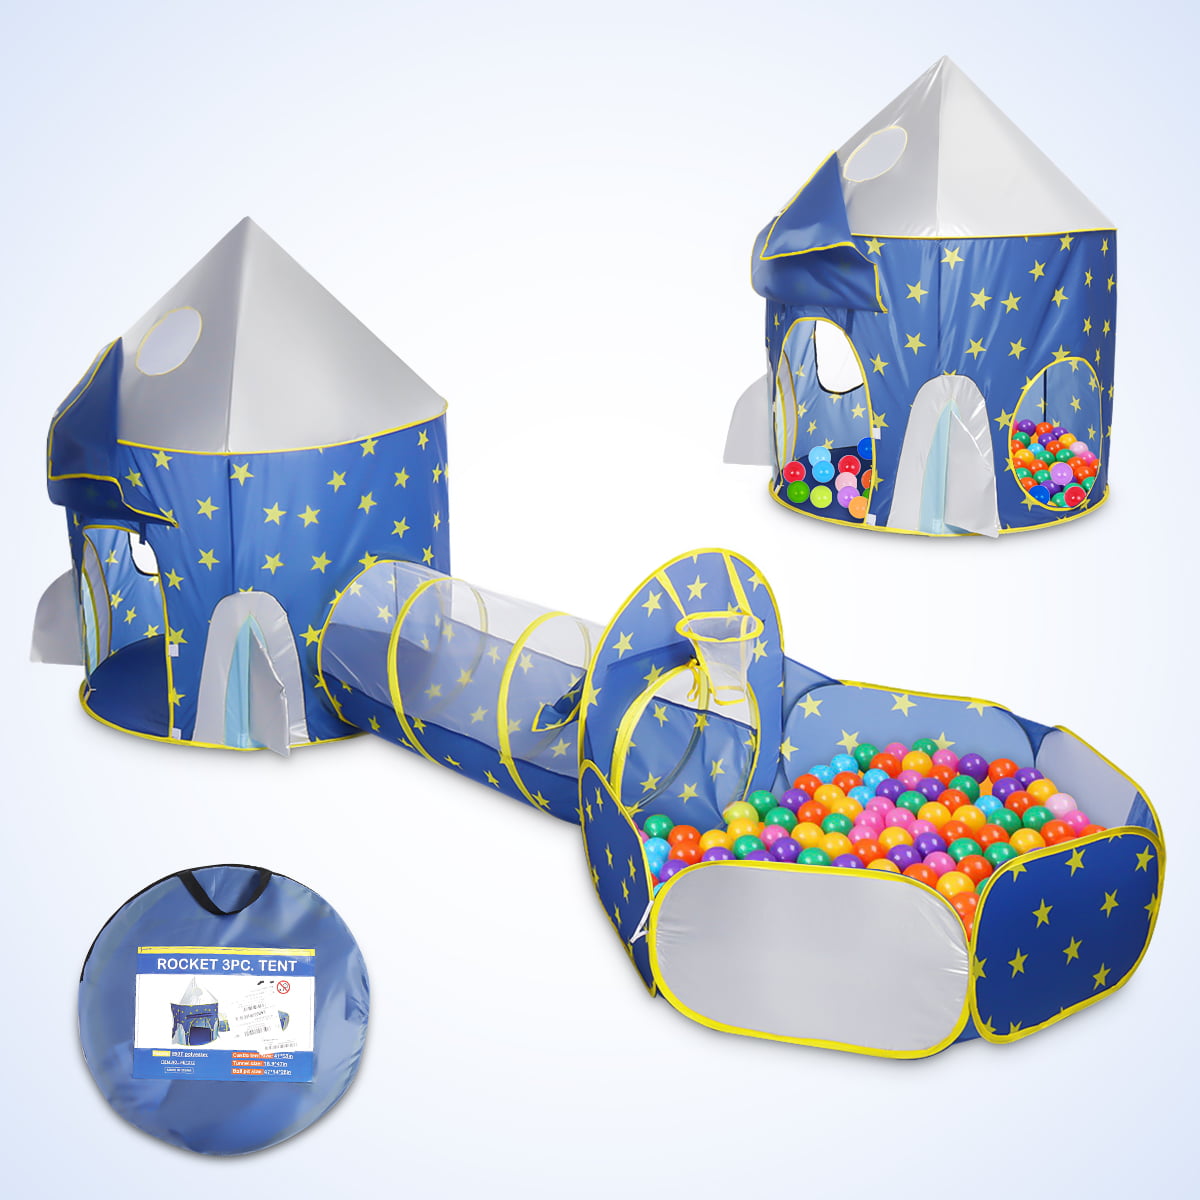 3 in 1 Rocket Ship Play Tent Indoor/Outdoor Playhouse Set for Babies Toddleers 